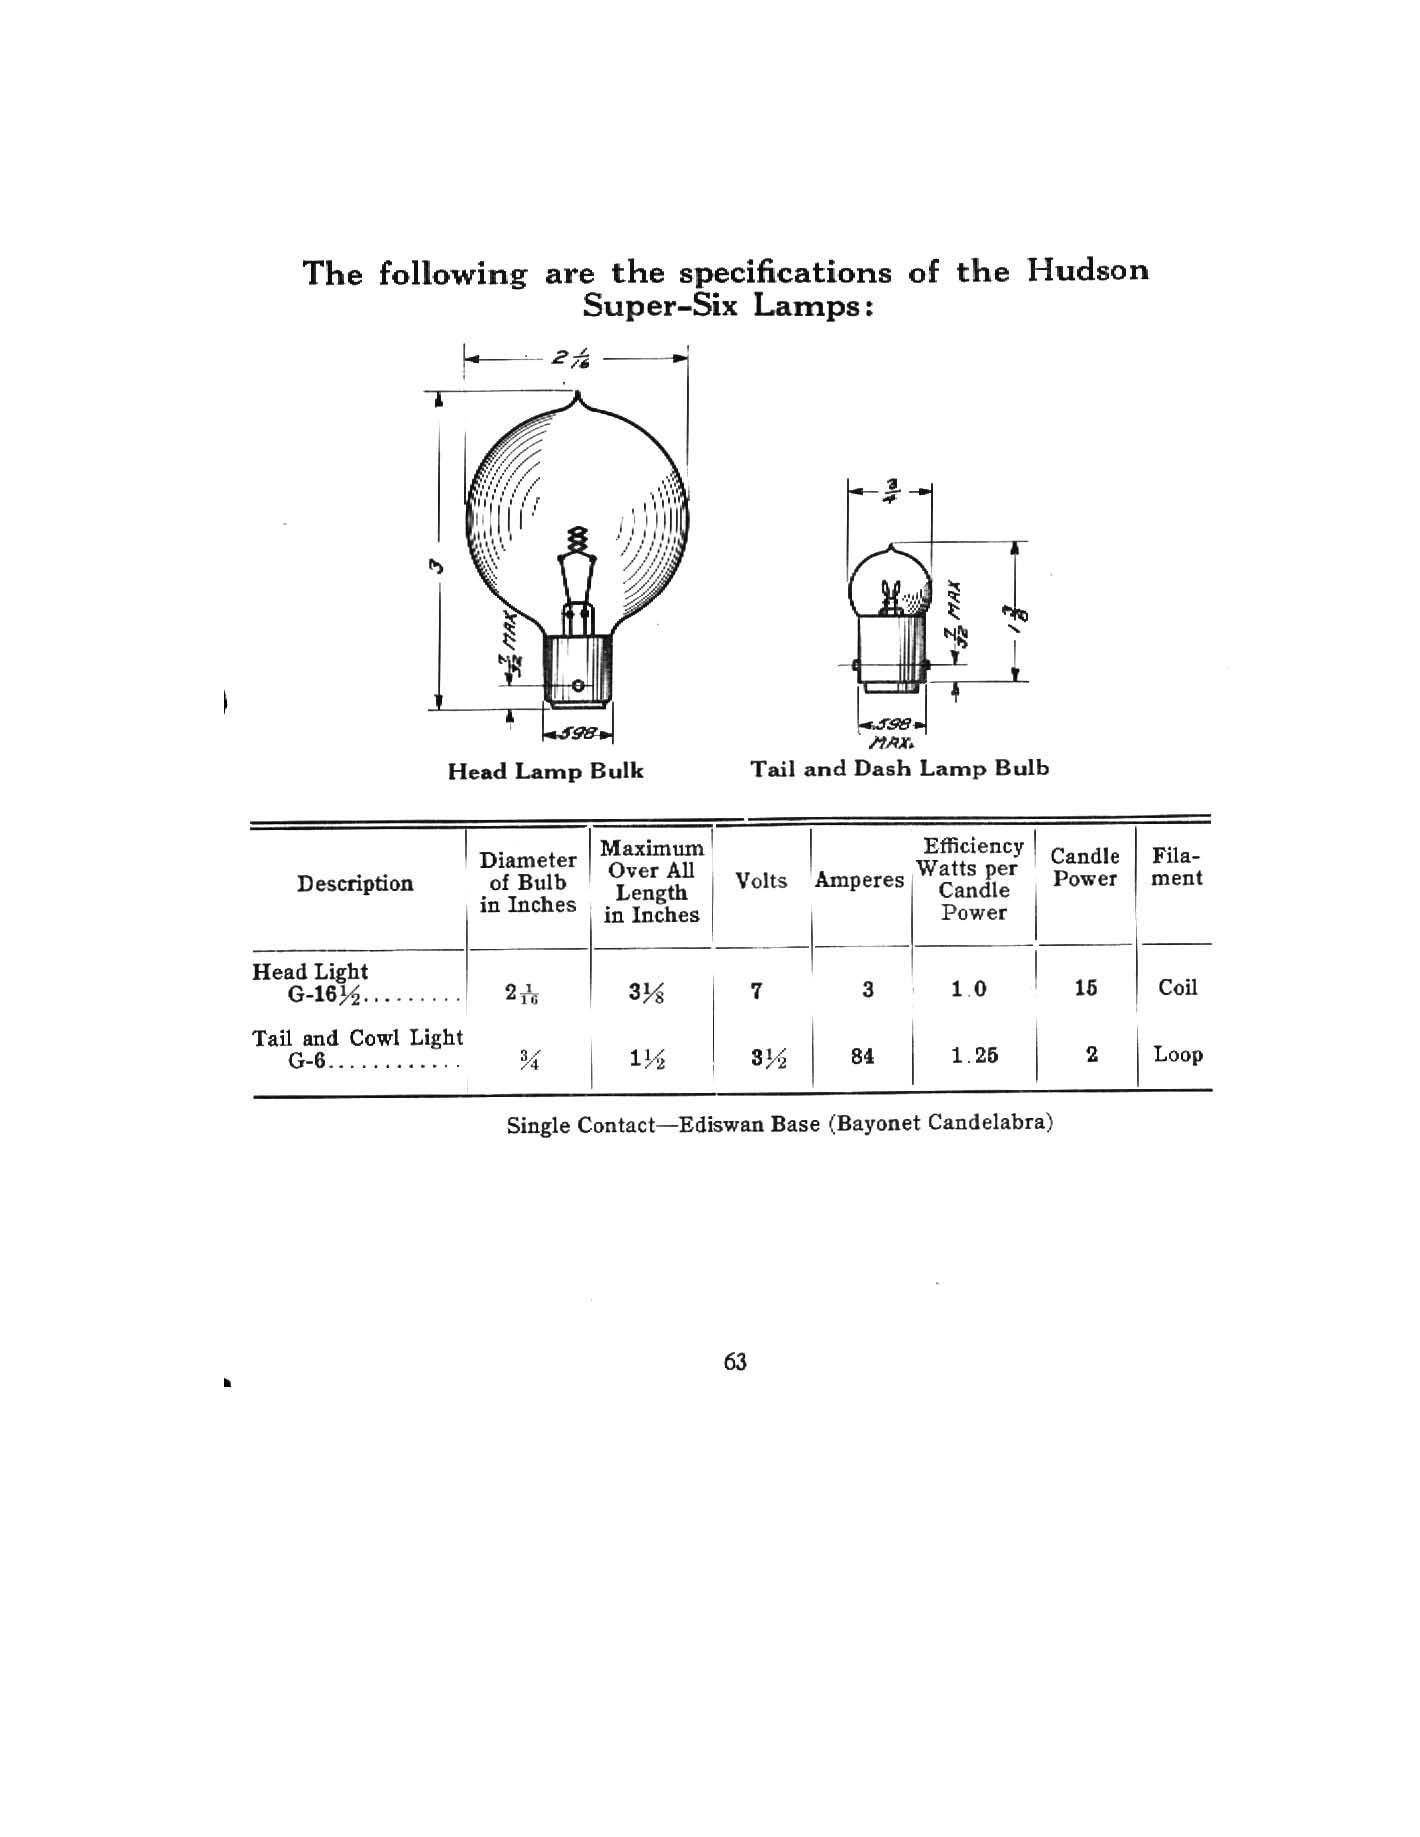 1916 Hudson Super-Six Reference Book-64